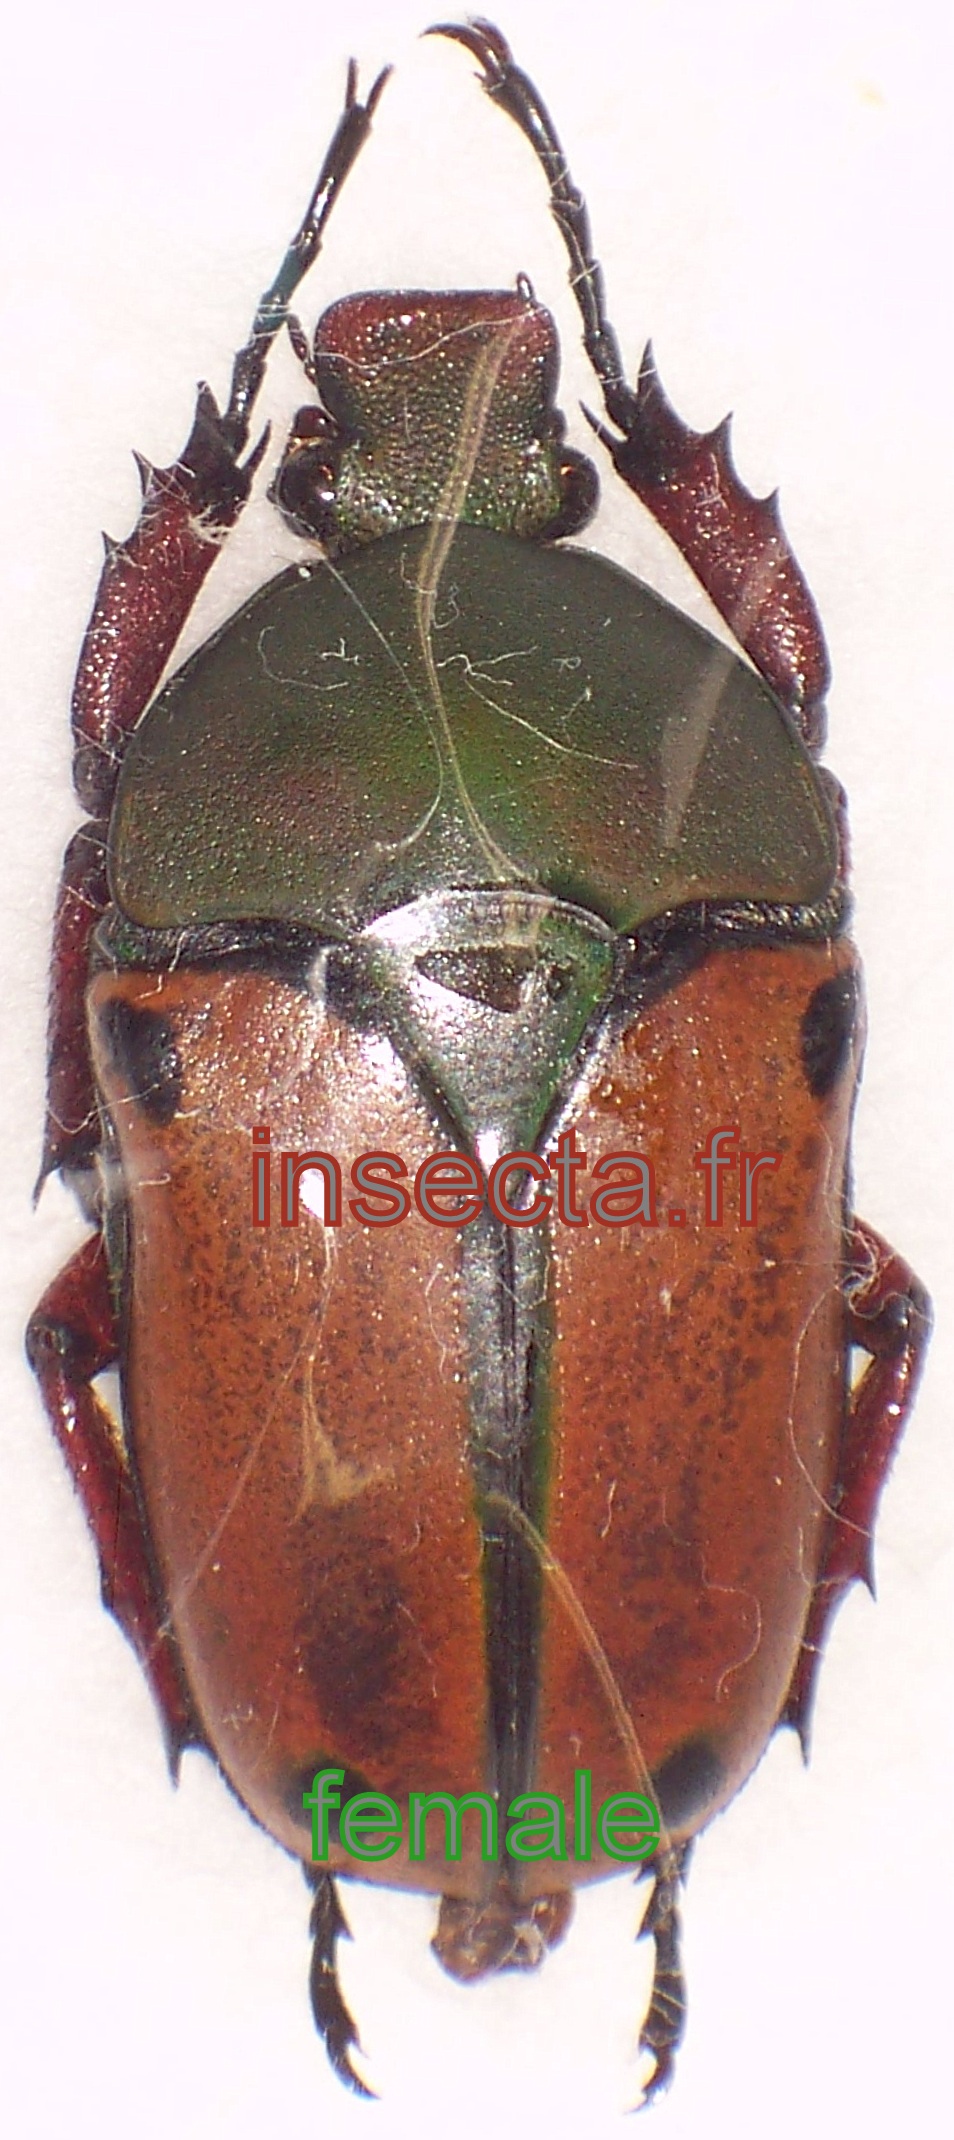 Coelorrhina (Cyprolais) loricata kiellandi female A-